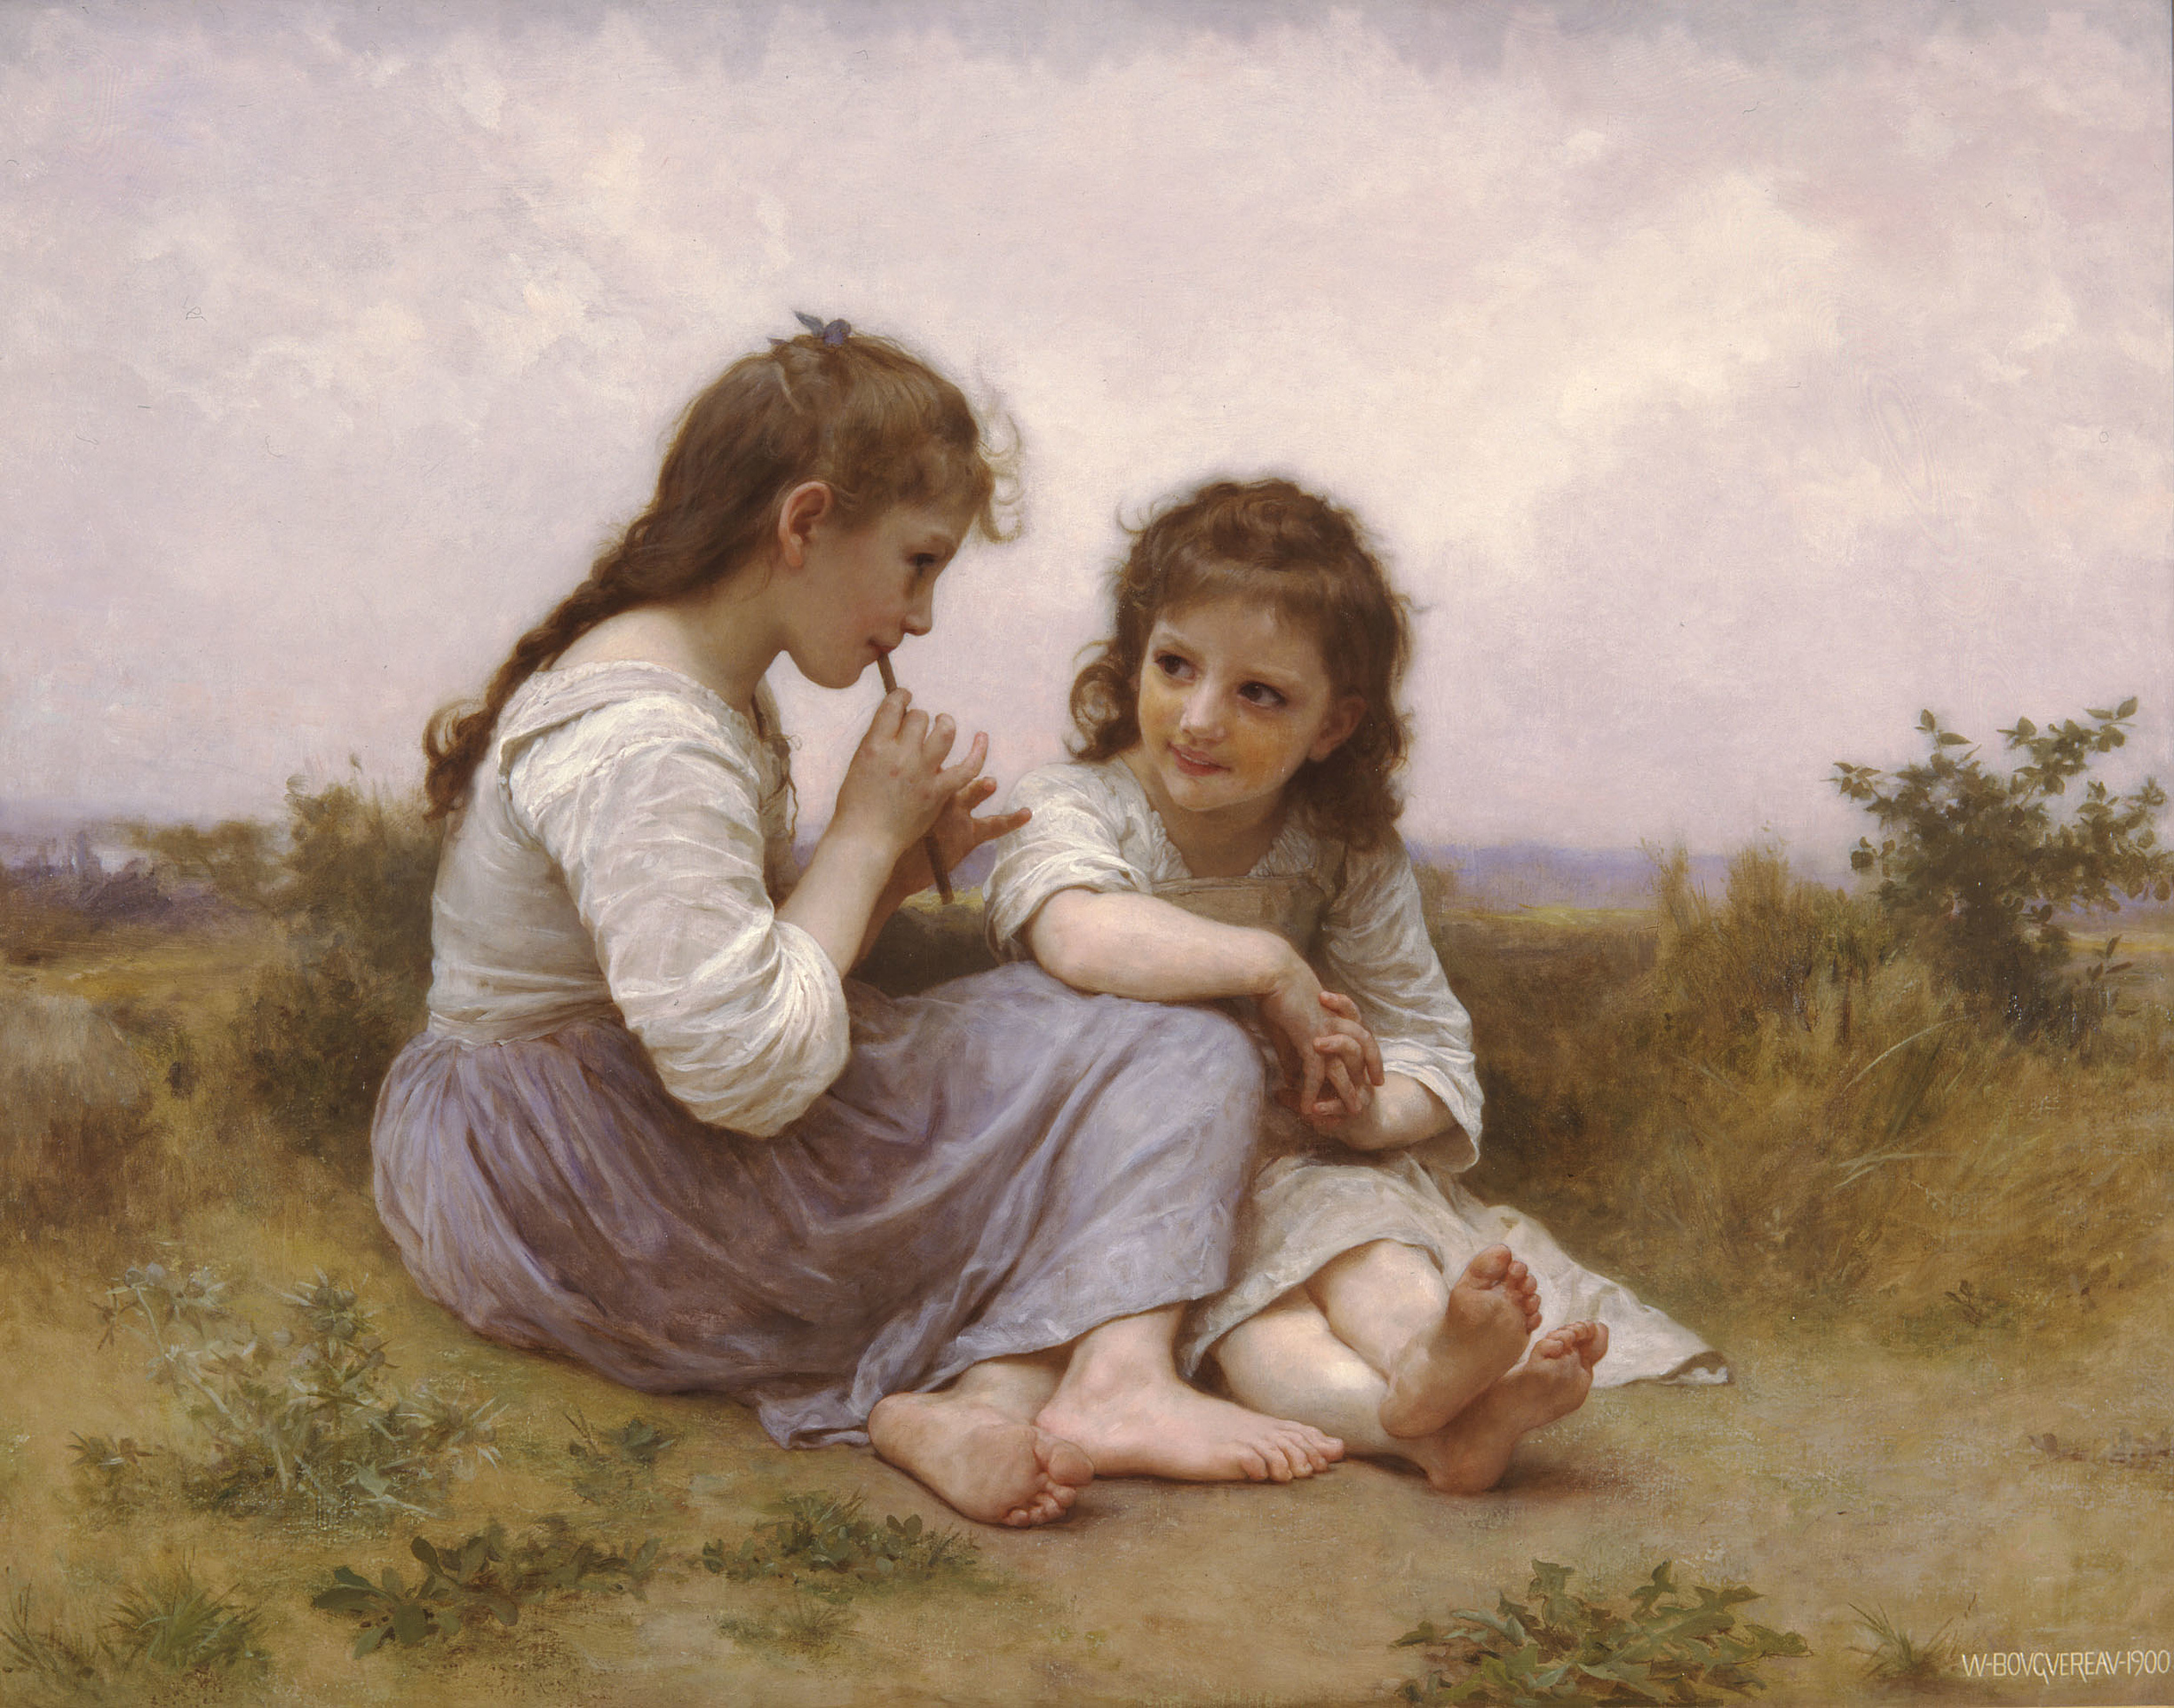 William-Adolphe_Bouguereau_(1825-1905)_-_A_Childhood_Idyll_(1900).jpg - Adolphe  Bouguereau